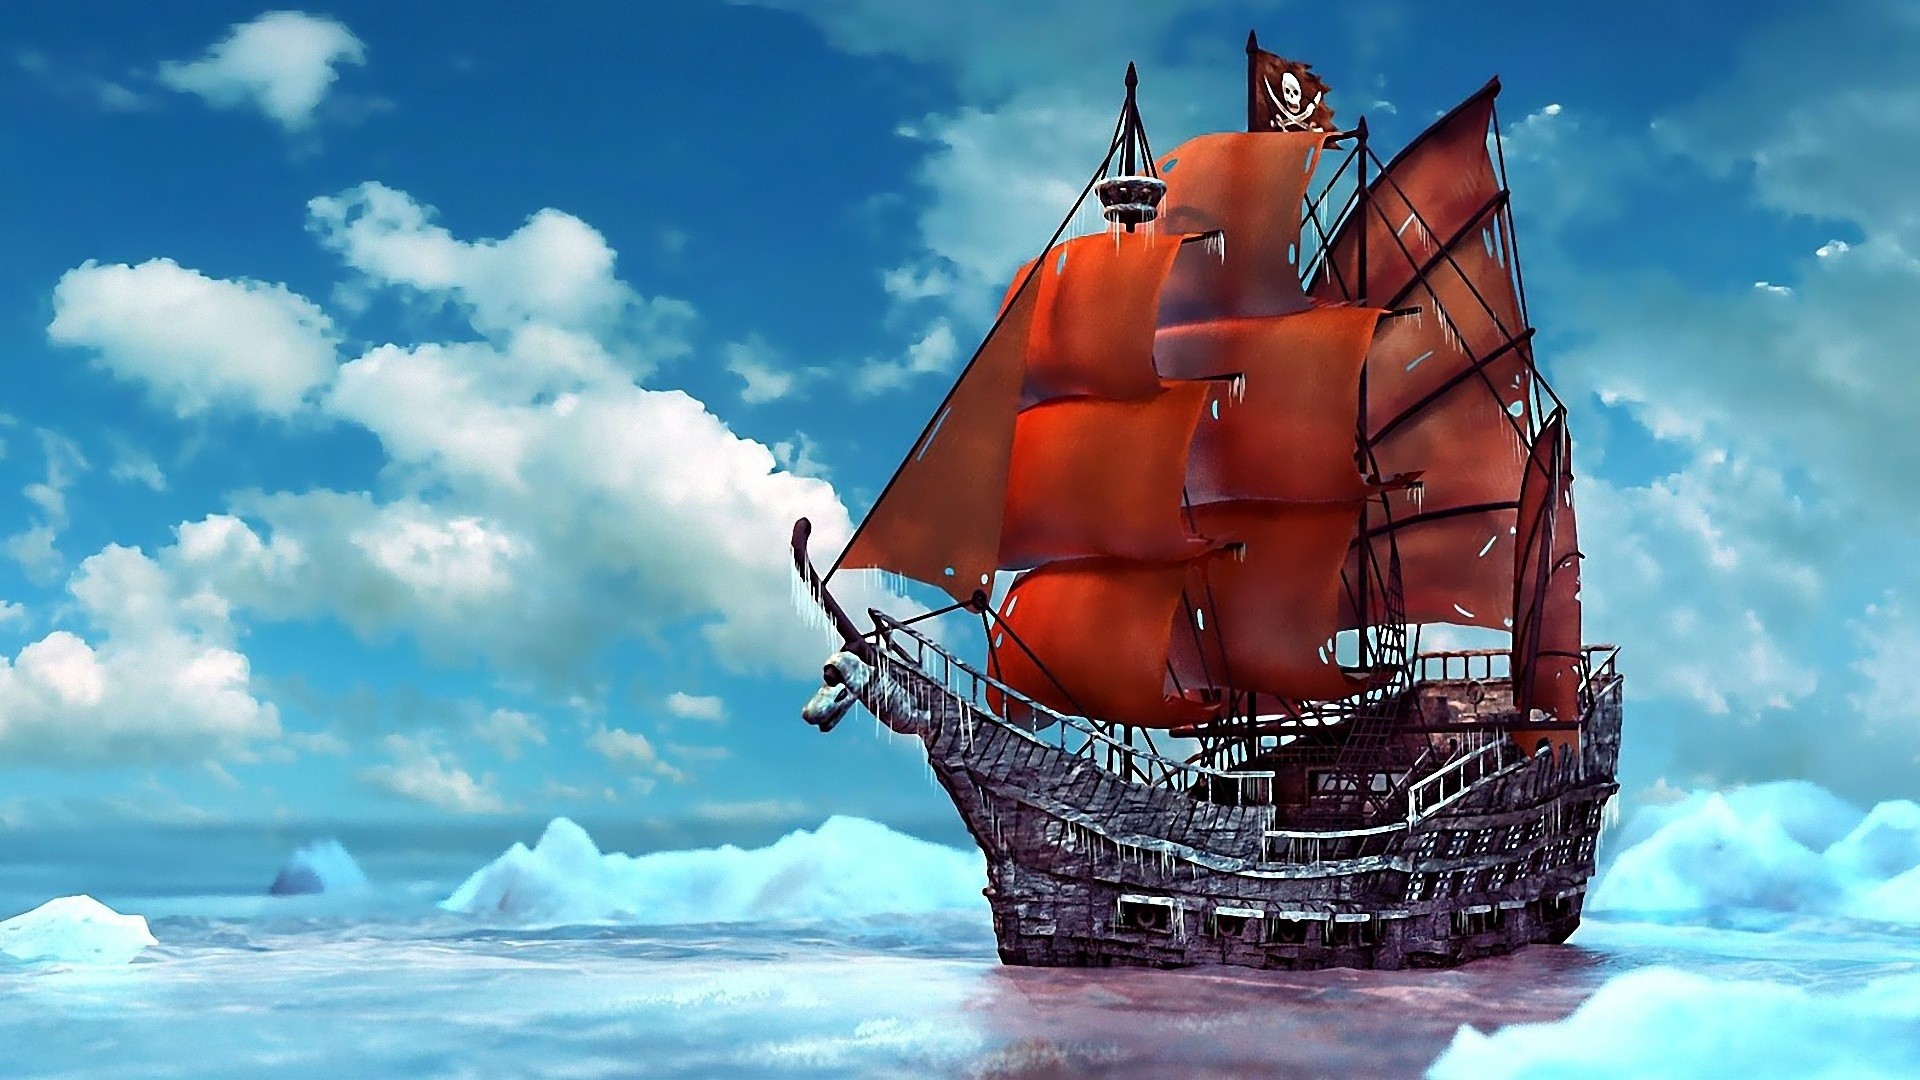 1920x1080 Pirate ship ice snow ship ships boat boats pirates ocean sea fantasy  wallpaper |  | 91229 | WallpaperUP